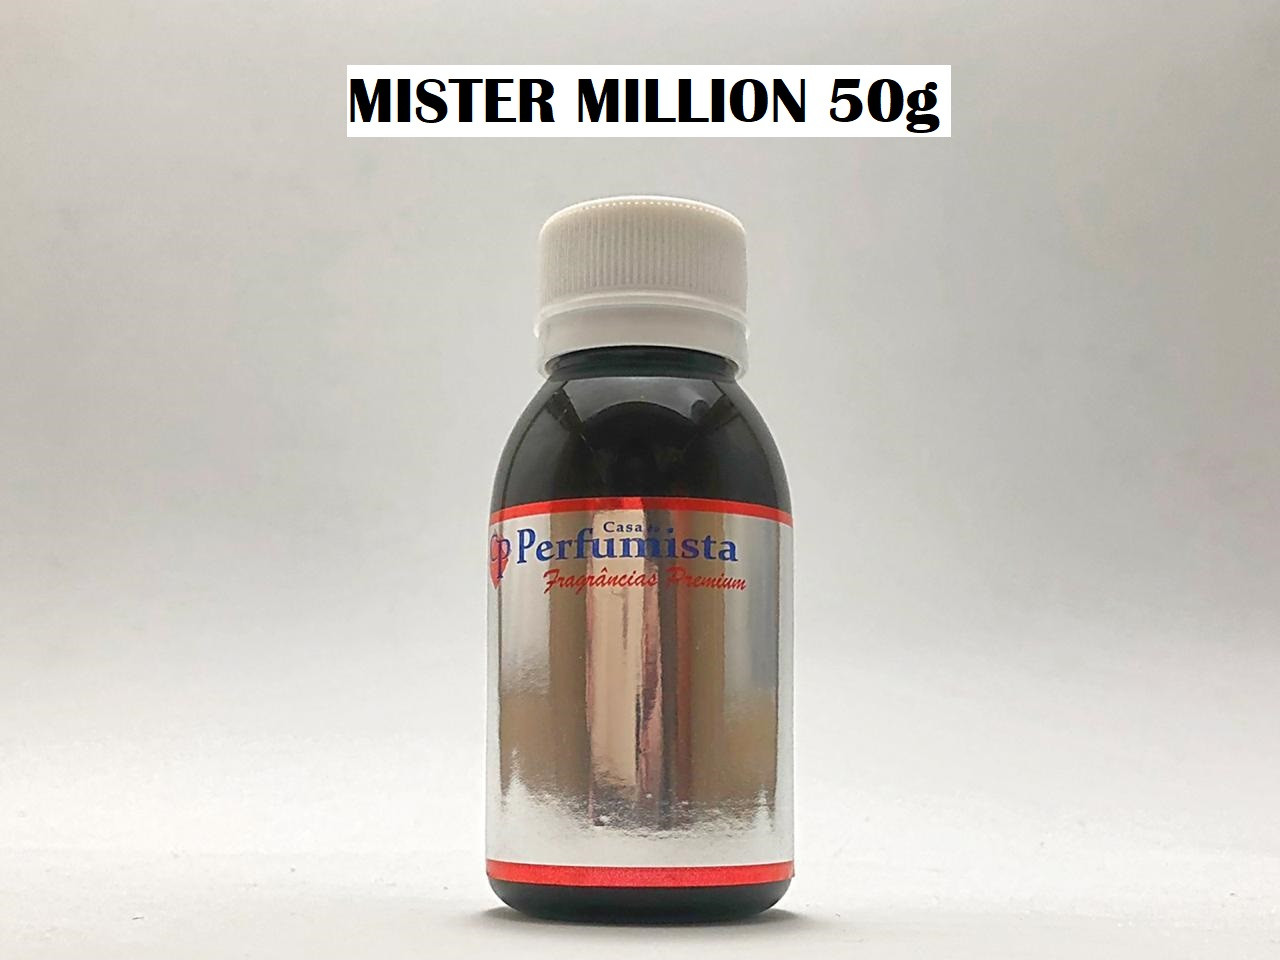 MISTER MILLION 50g - Inspiração: One Million Masculino